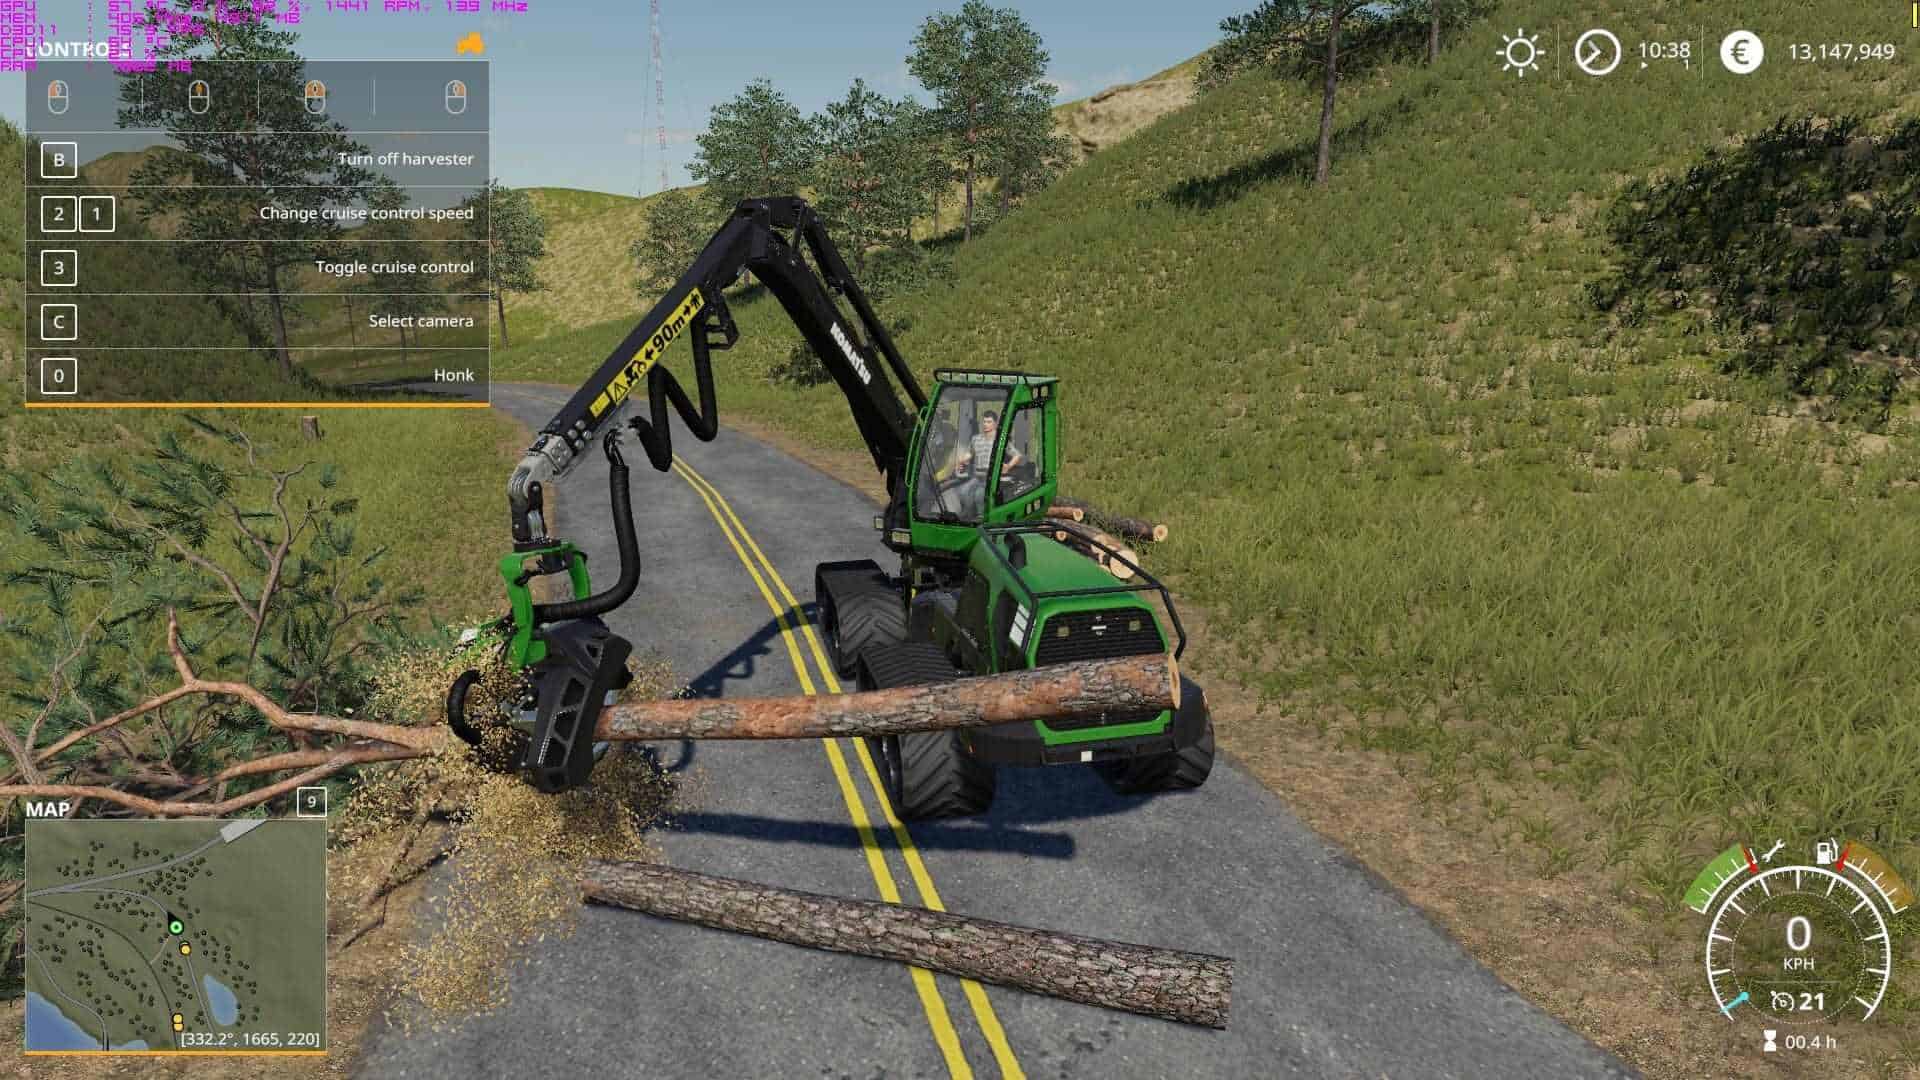 Manual Cutting for Wood Harvester v1.0 Mod - Farming Simulator 19 Mod